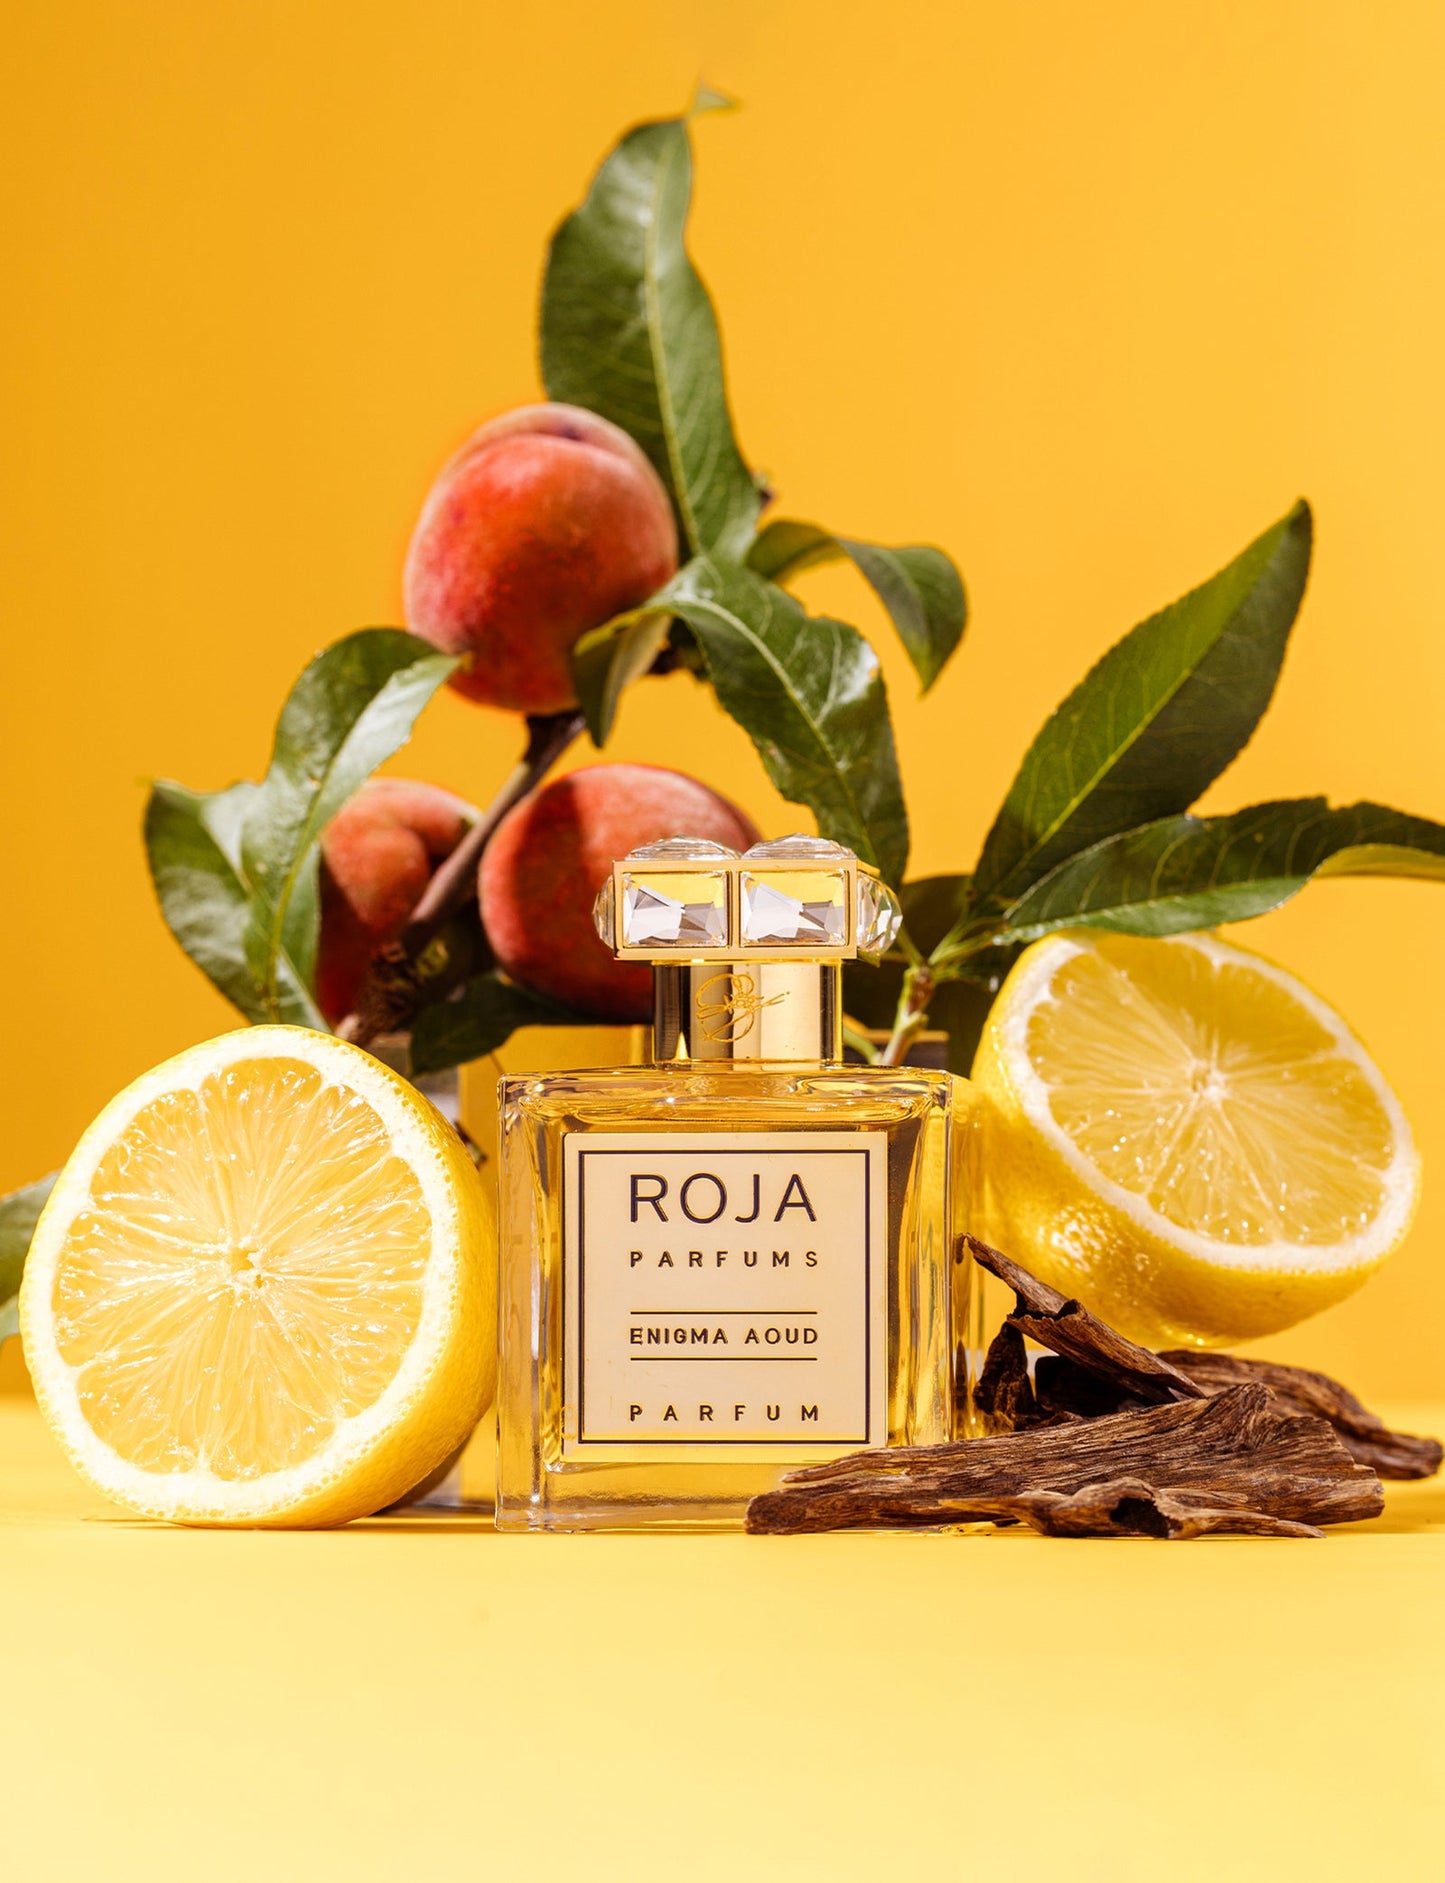 Enigma Aoud Parfum Roja Parfums Sample 2ml